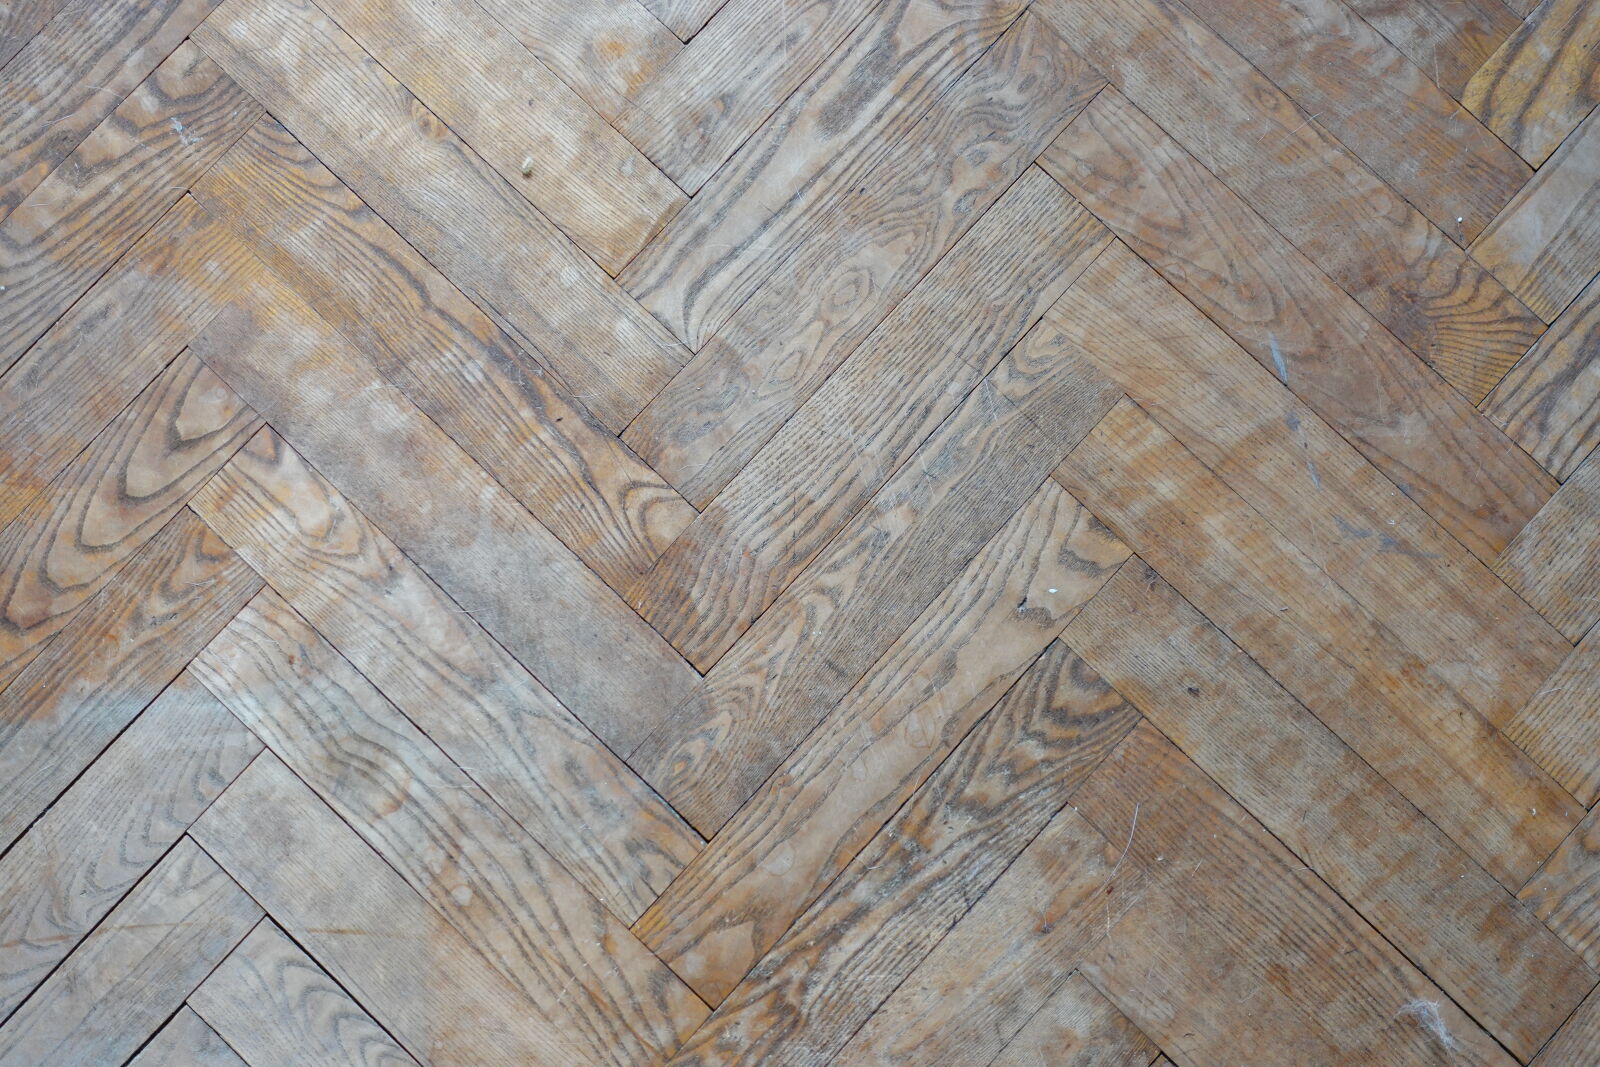 Sony ZV-1 sample photo. Wooden floor photography